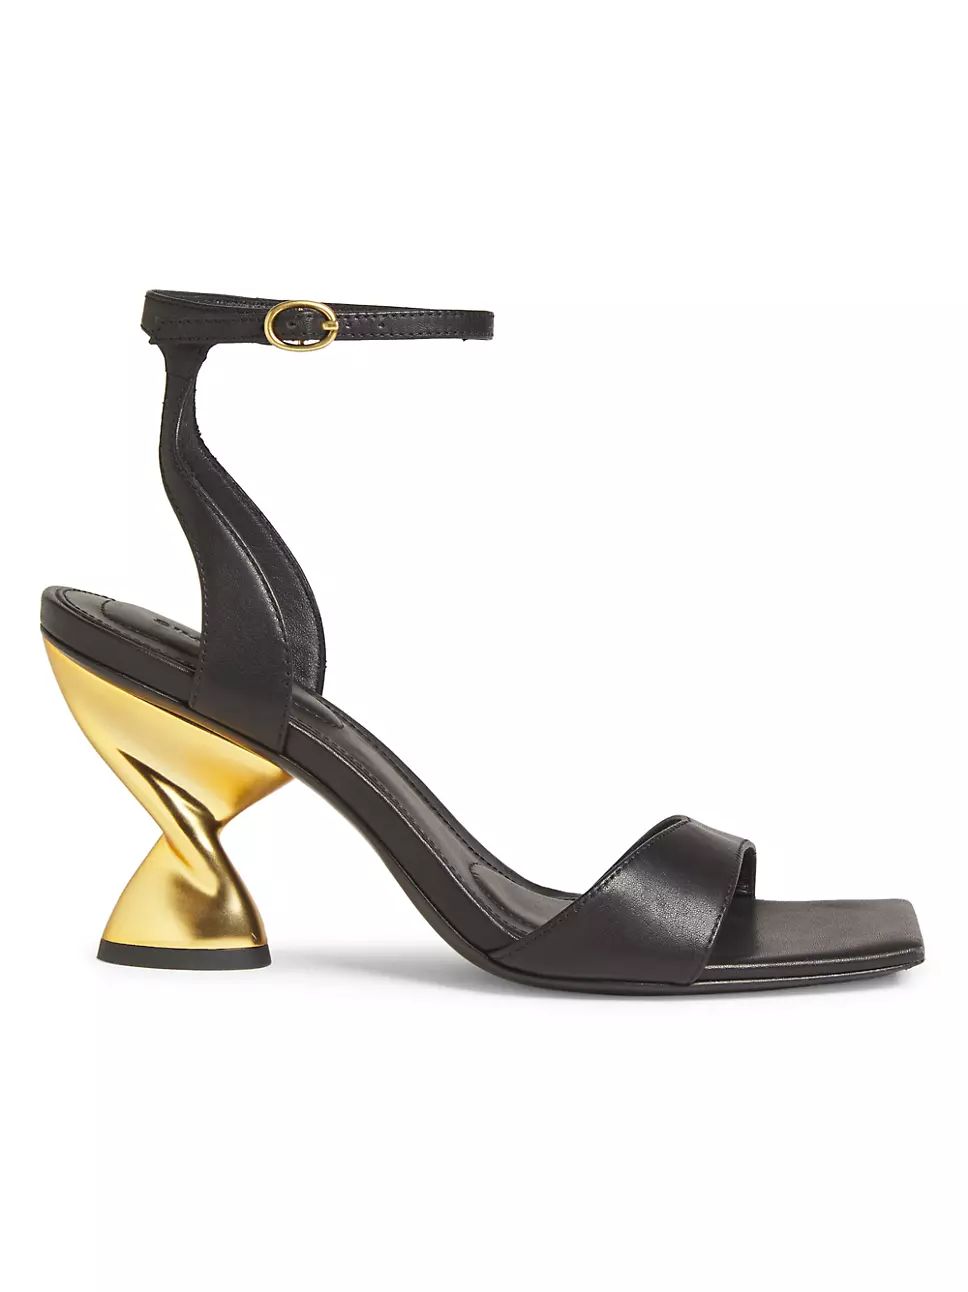 Chloe Twist 80MM Leather Sandals | Saks Fifth Avenue